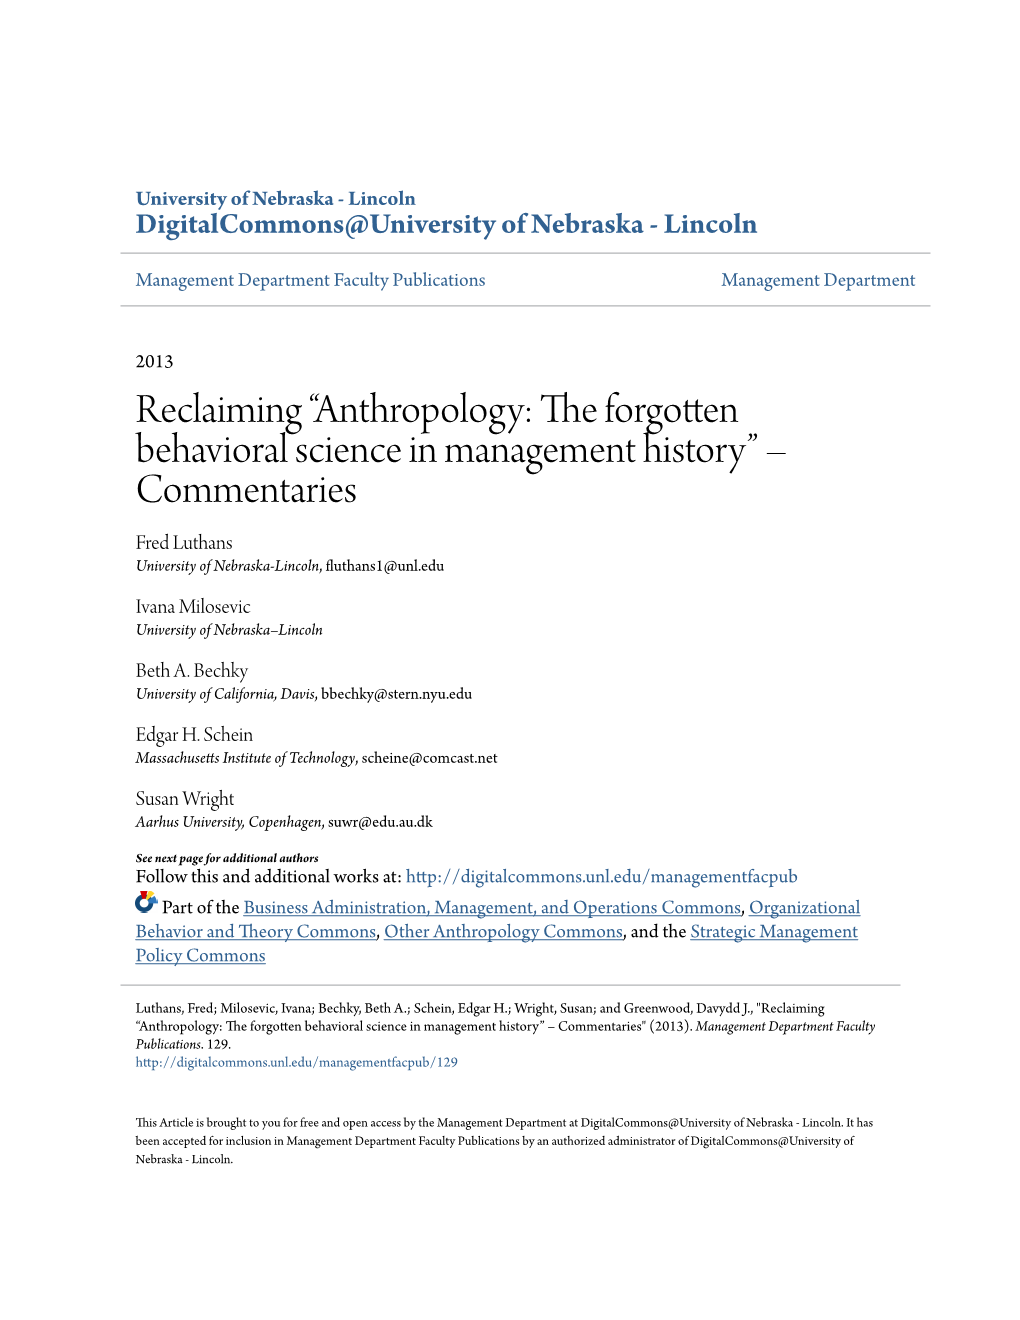 Anthropology: the Forgotten Behavioral Science in Management History” – Commentaries Fred Luthans University of Nebraska-Lincoln, Fluthans1@Unl.Edu